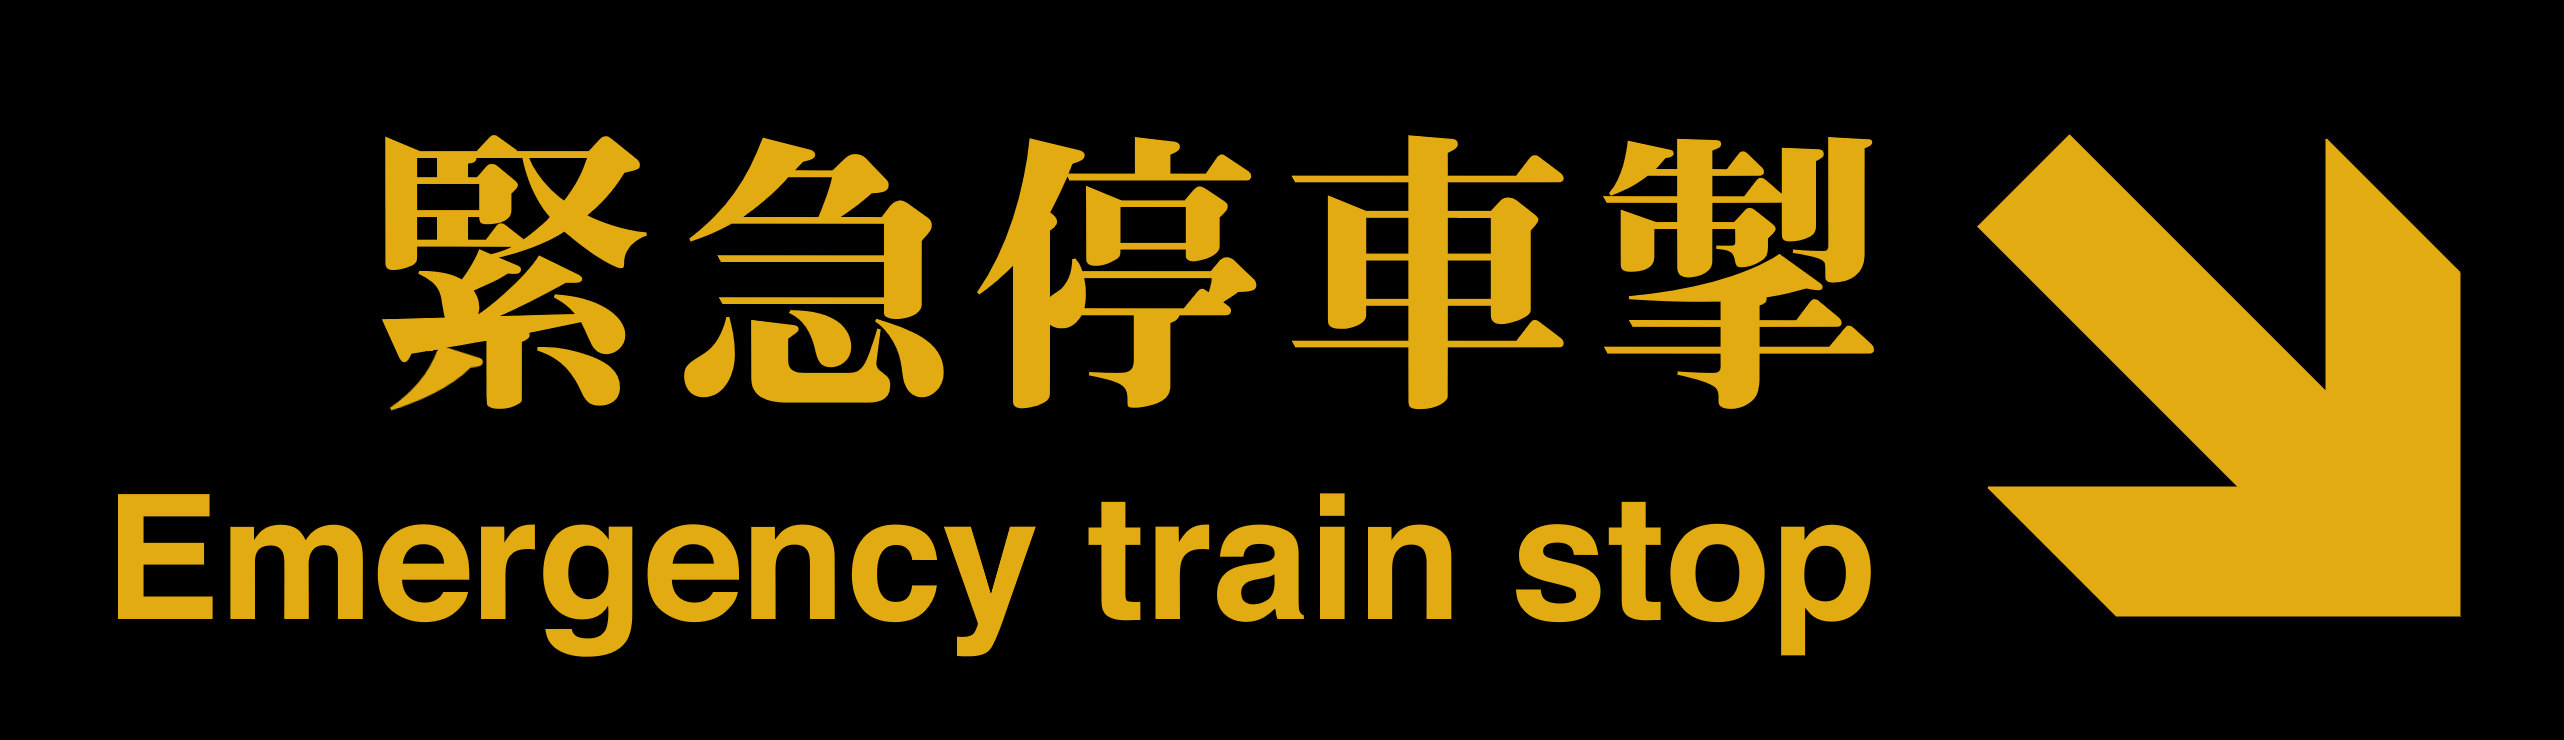 KCR signage: Emergency train stop (Arrow pointing towards bottom right)